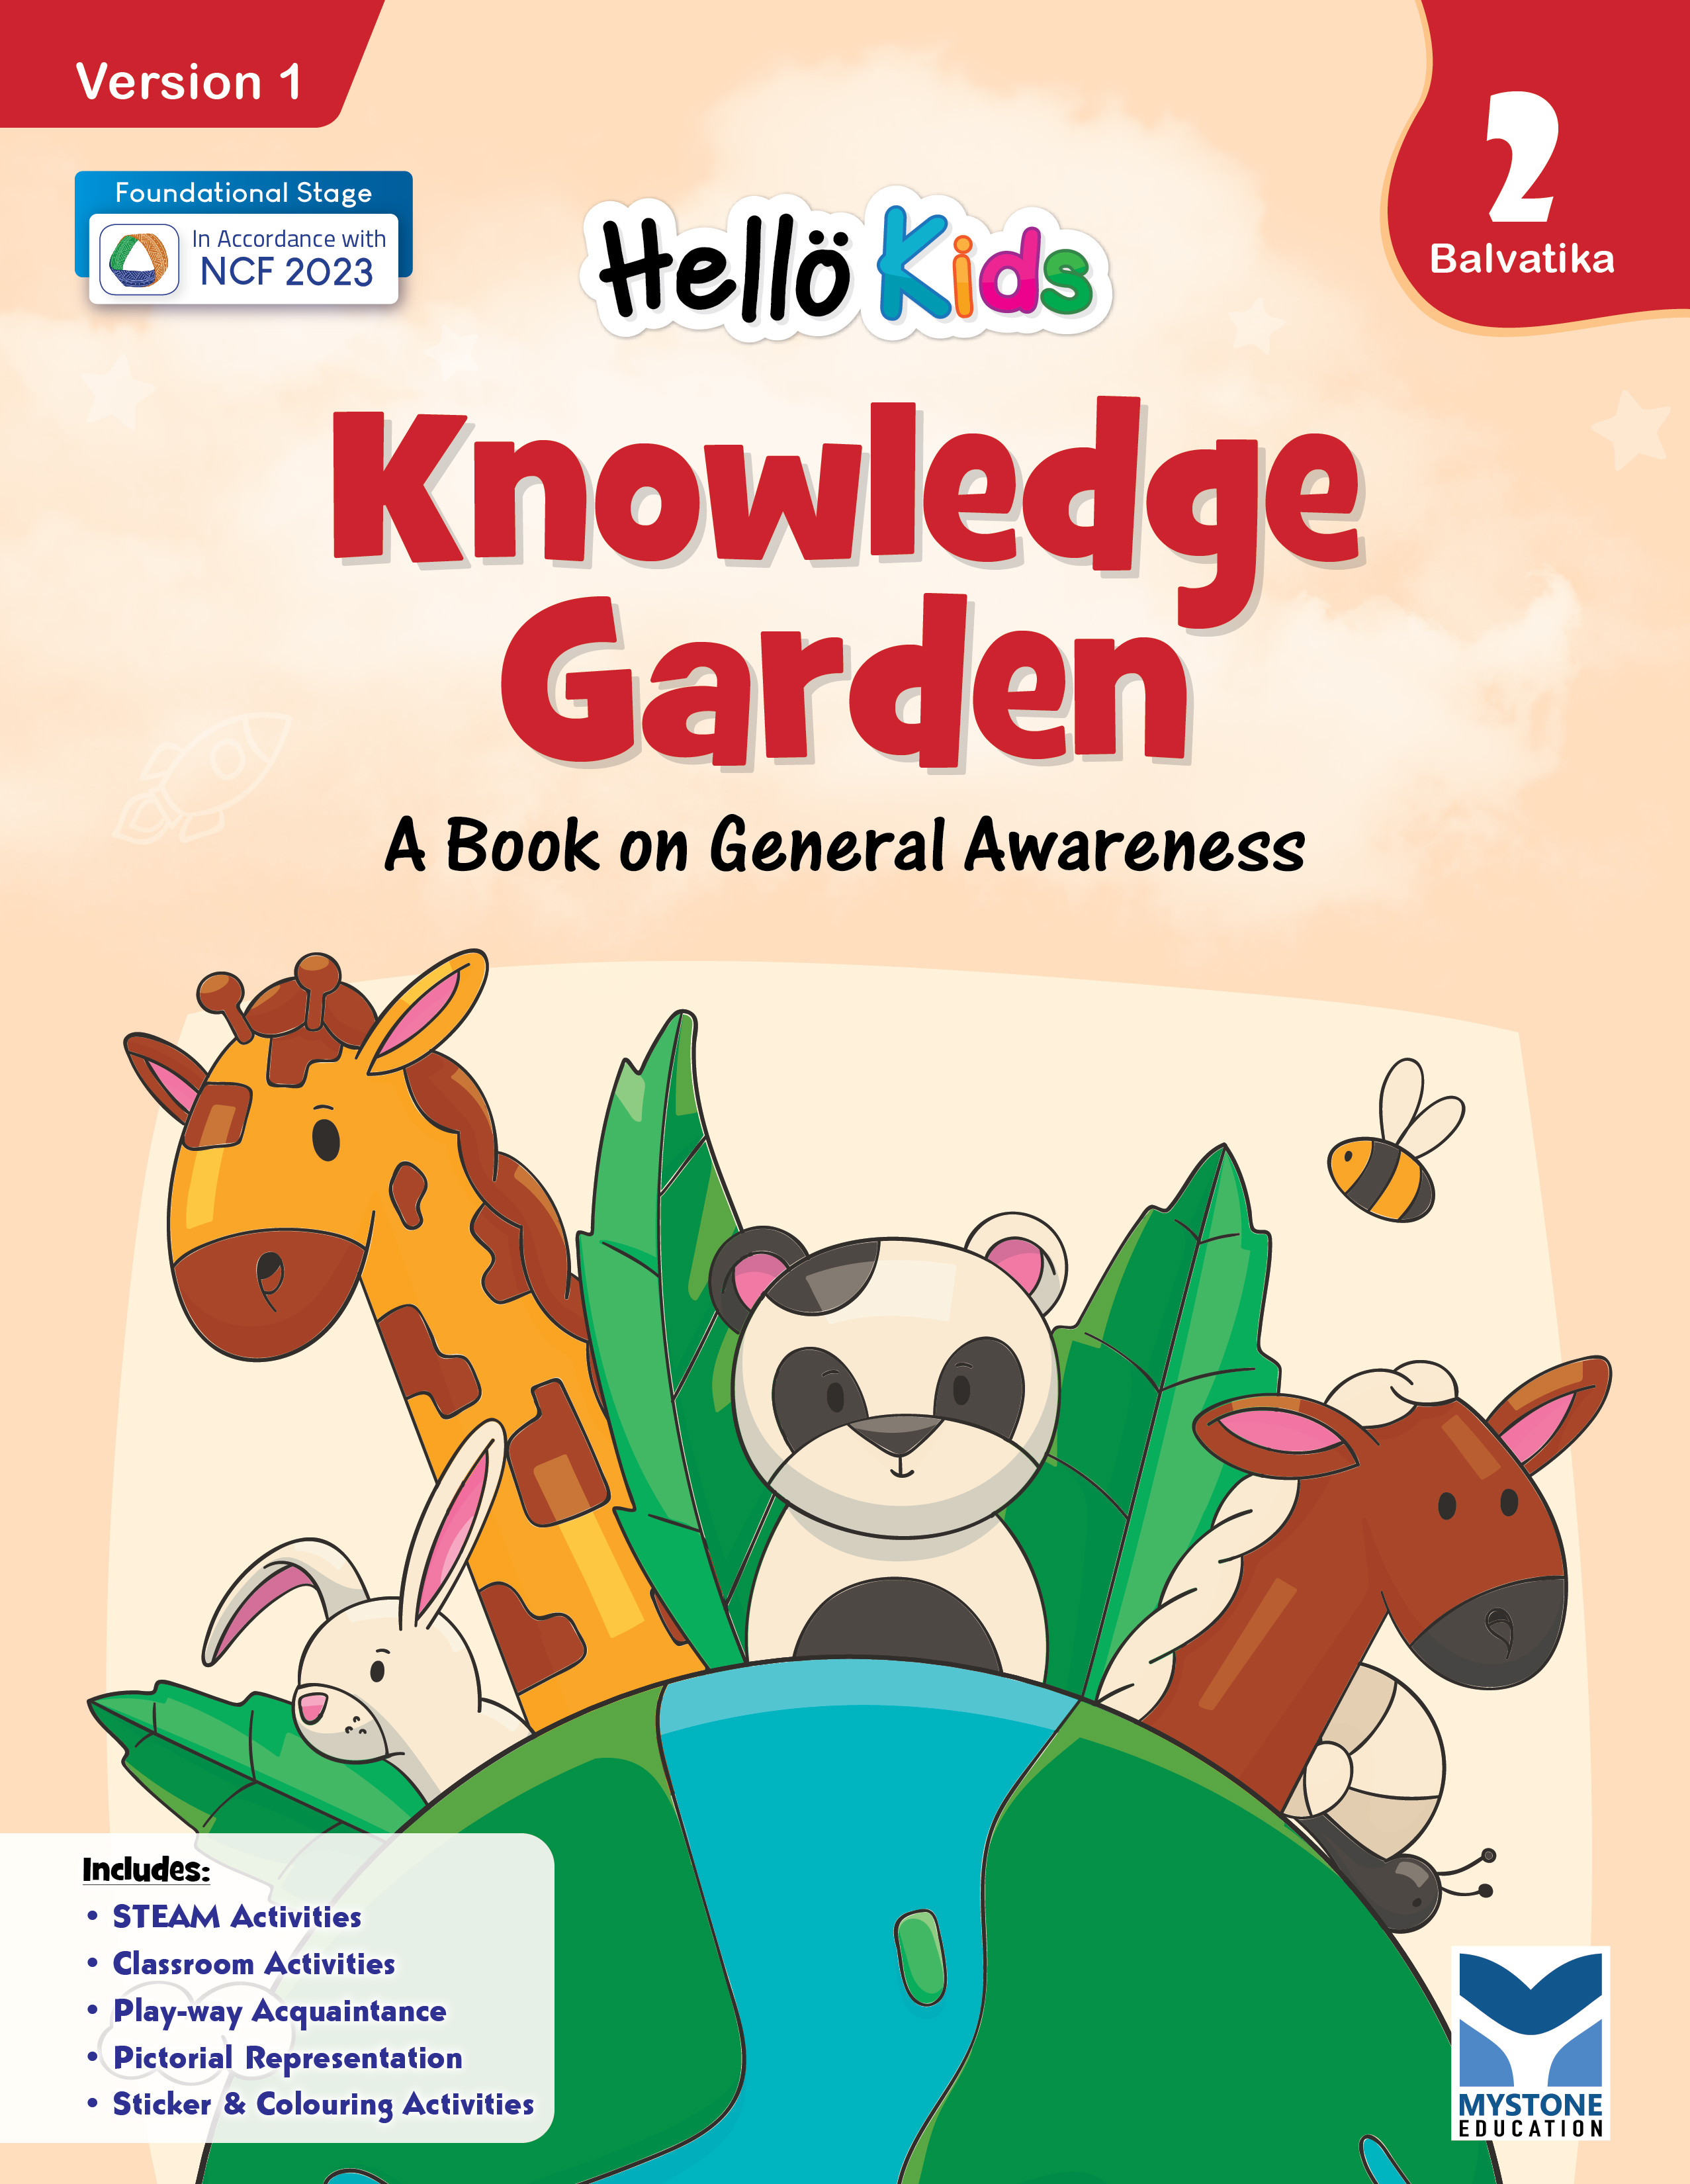 Hello Kids Knowledge Garden Balvatika 2 Ver. 1